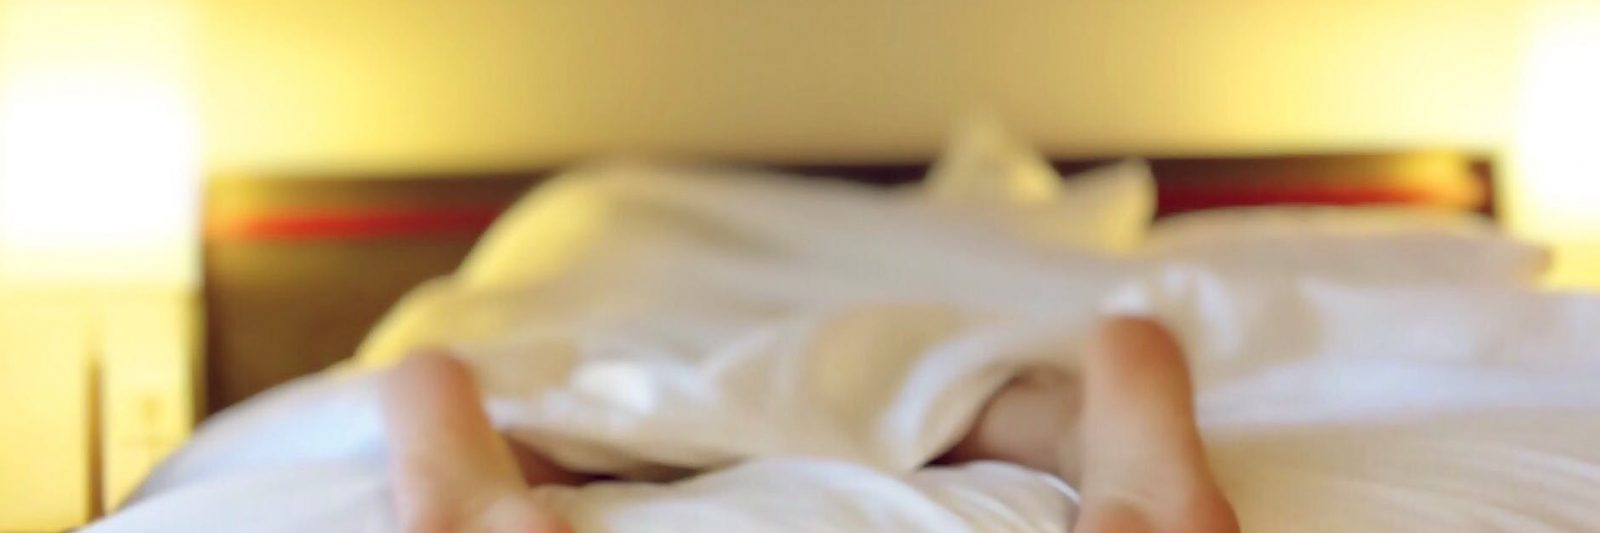 alone bed bedroom blur